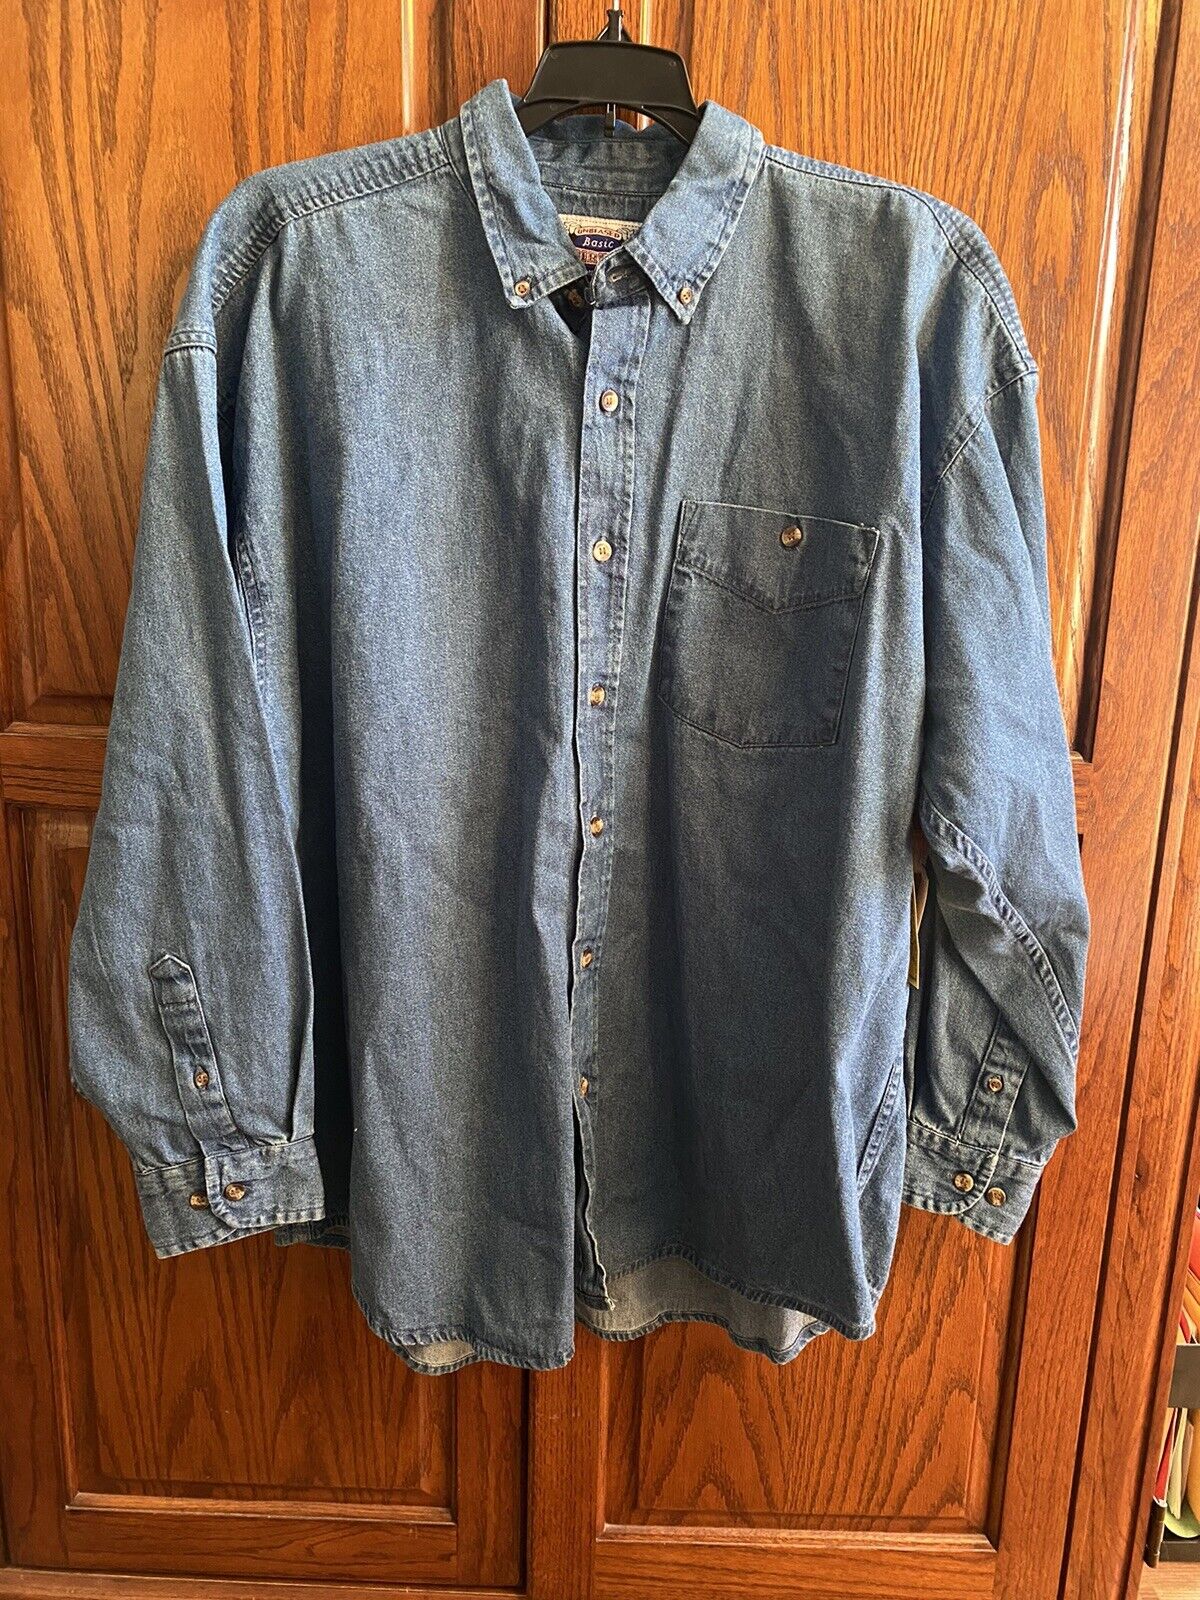 NWT Vintage Reservoir Clothing Size 3XLT Tall Denim Button Up Long Sleeve Shirt